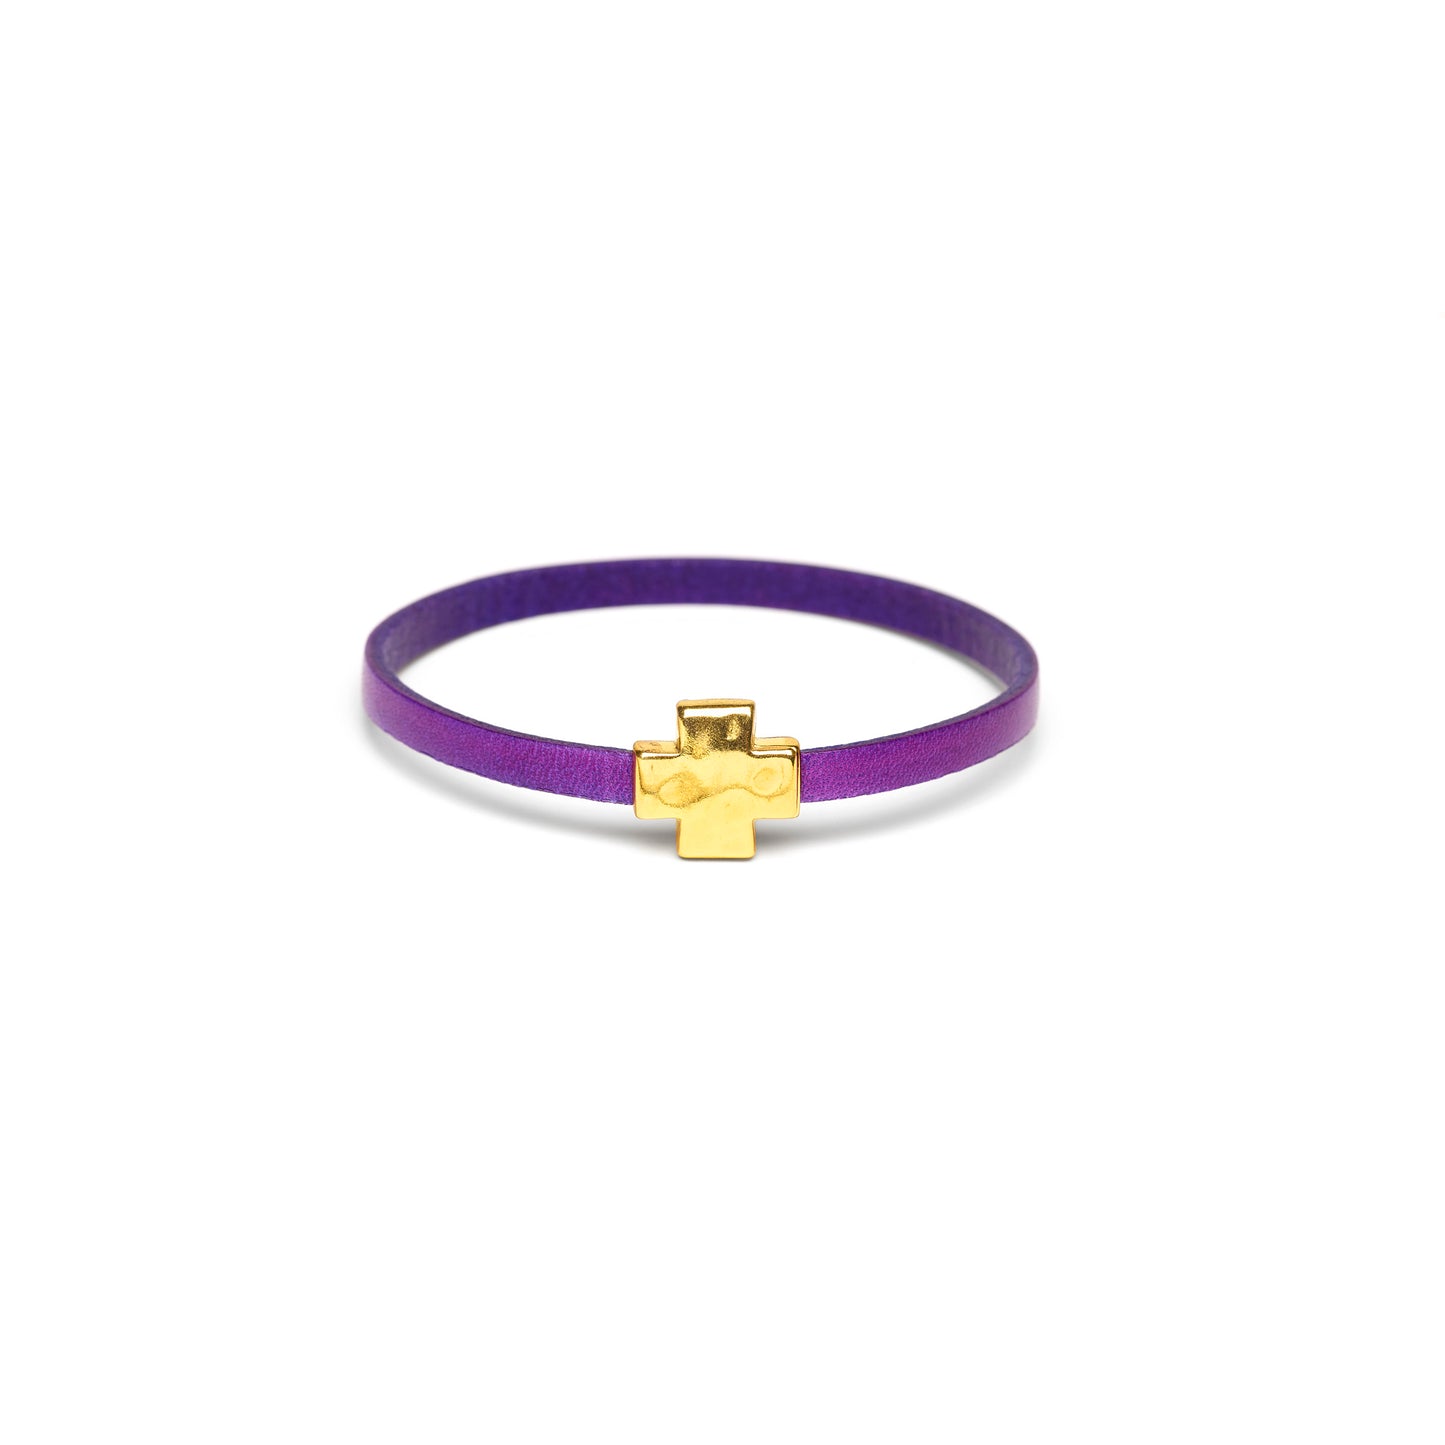 "Wrap it Up Bracelet" with Gold Cross - Single Length - Purple